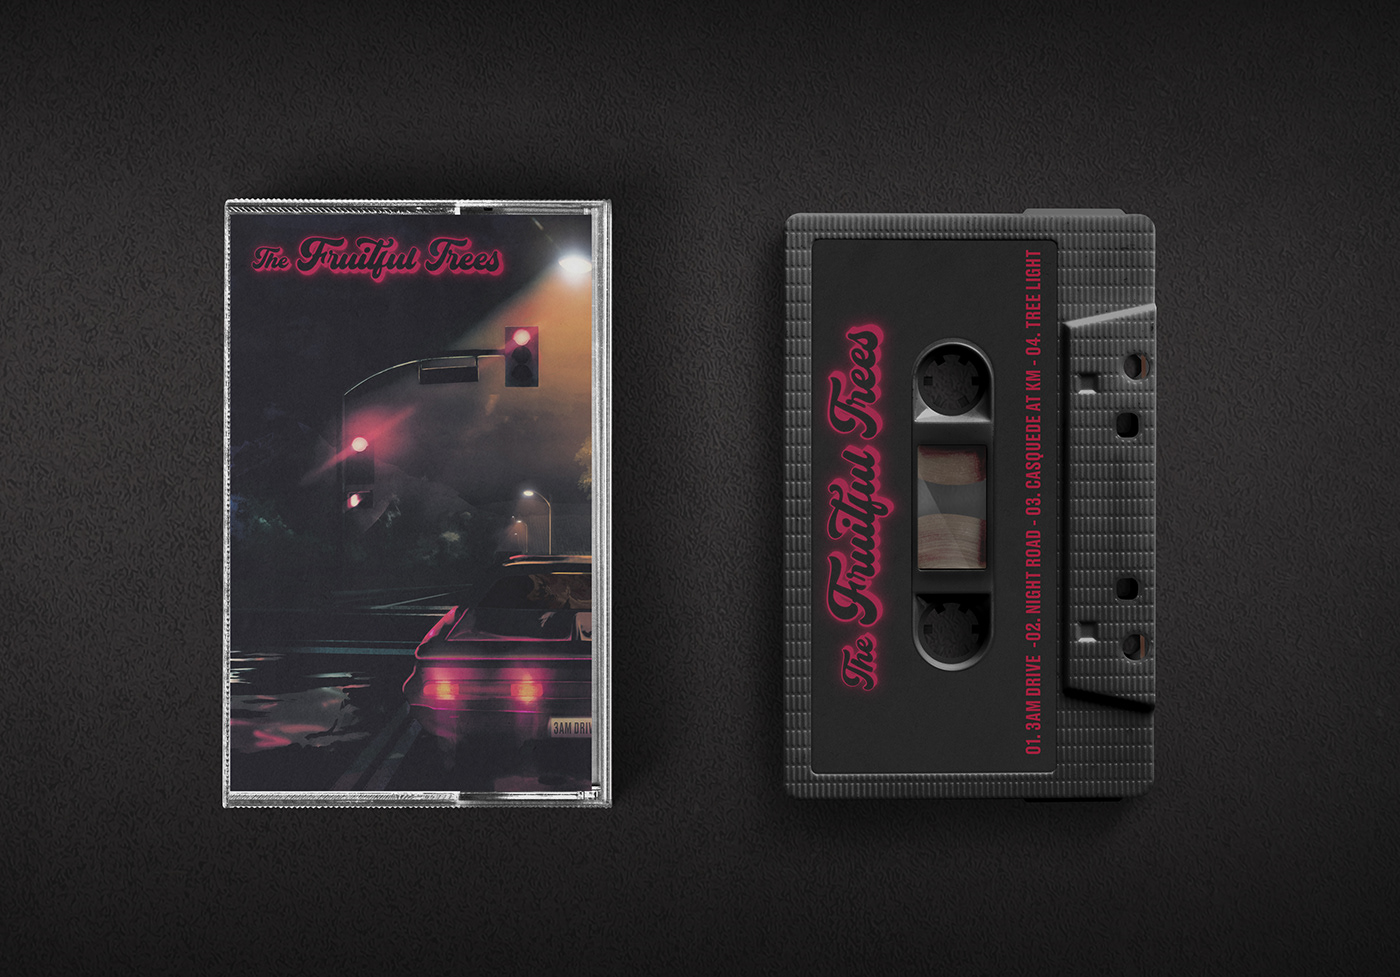 vaporwave aesthetic Retro 80s Synthwave vintage 1980s vinyl album cover Outrun